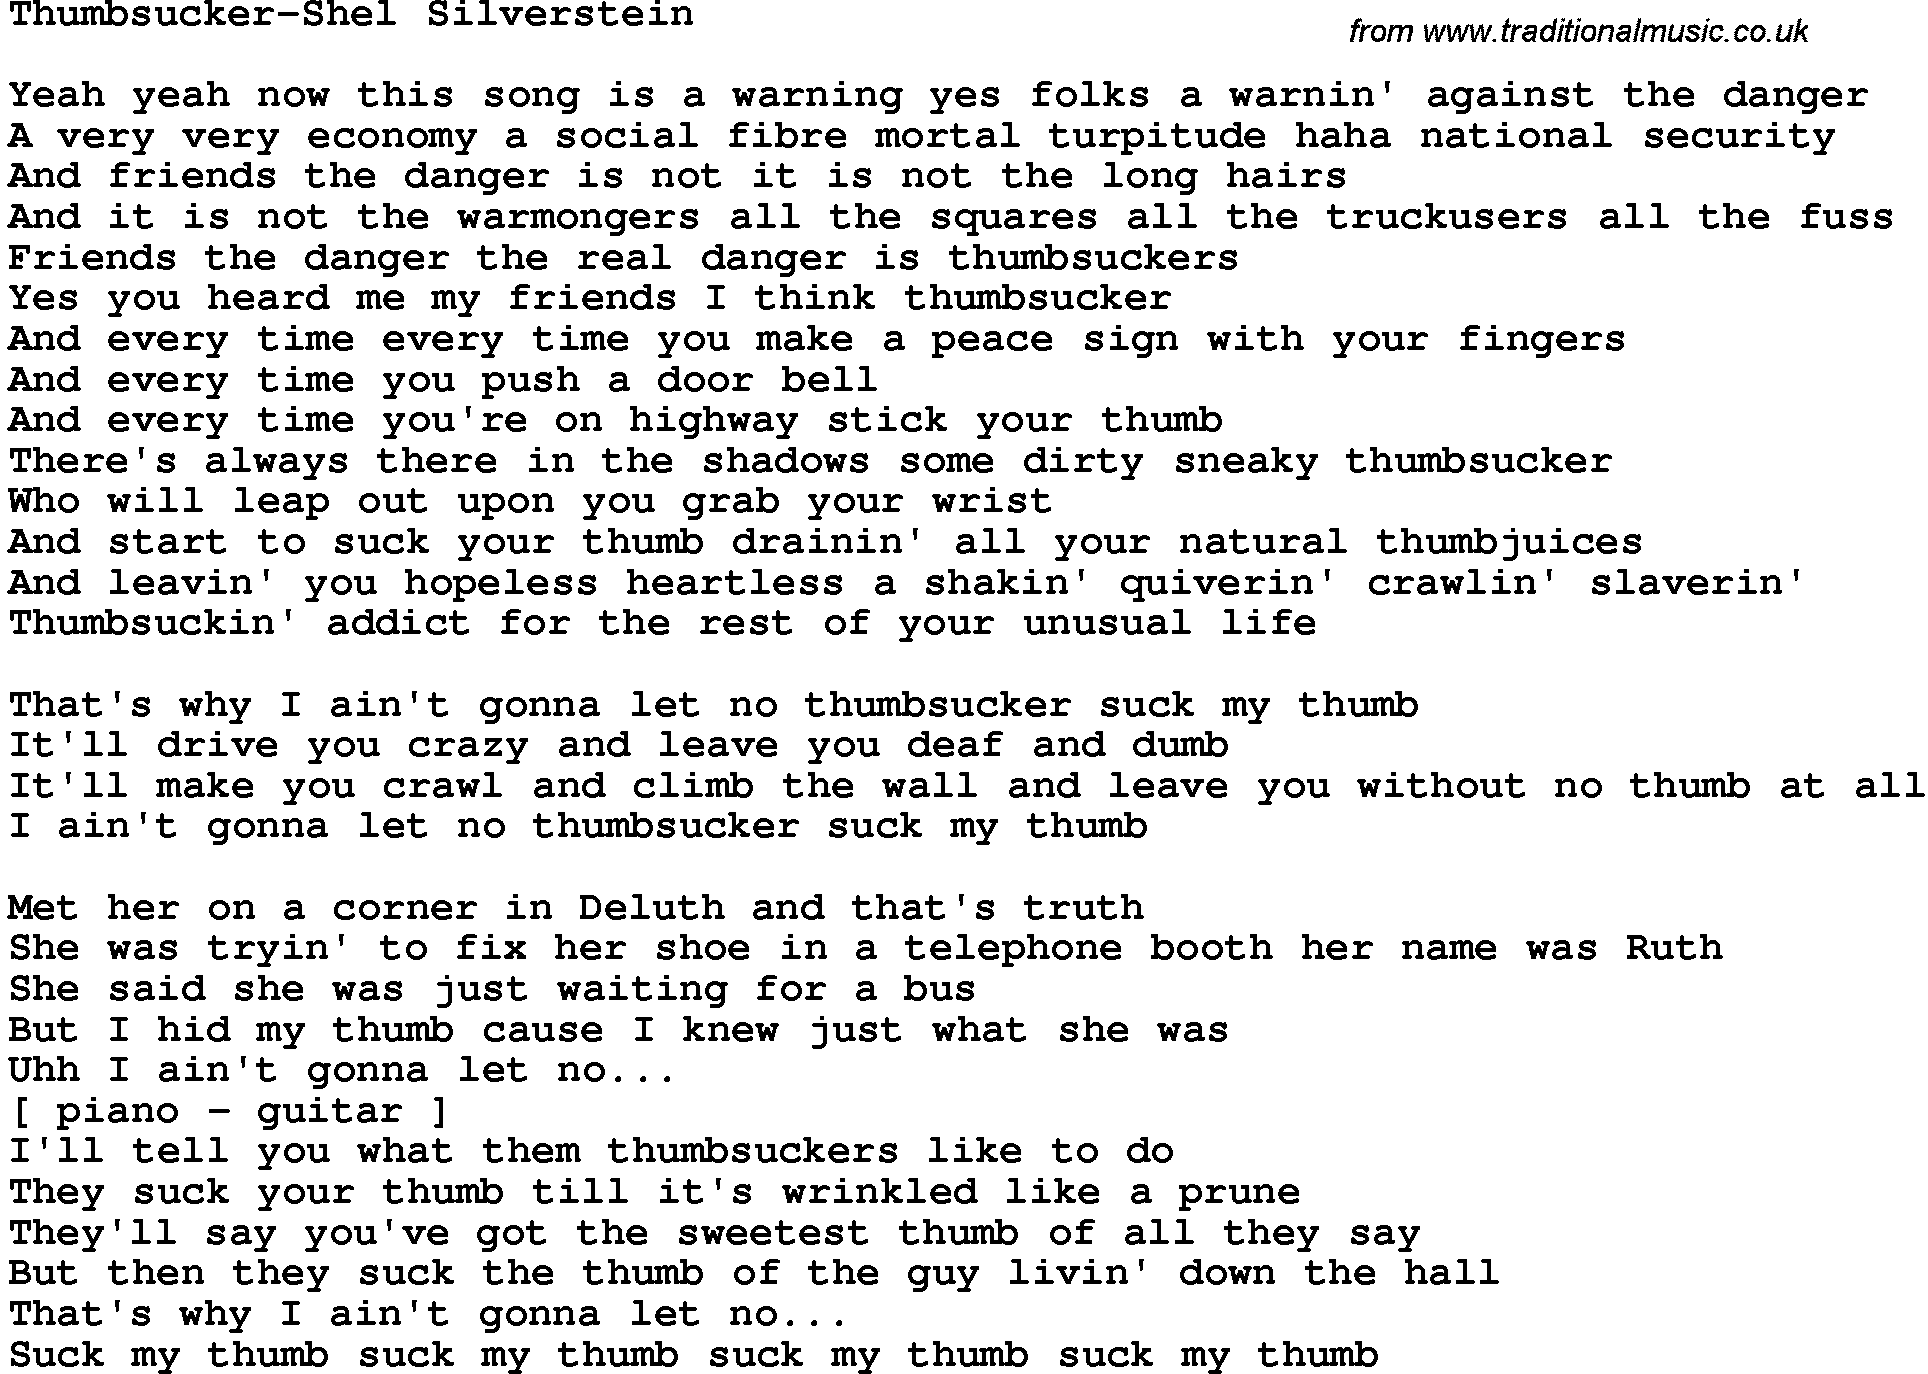 Novelty song: Thumbsucker-Shel Silverstein lyrics